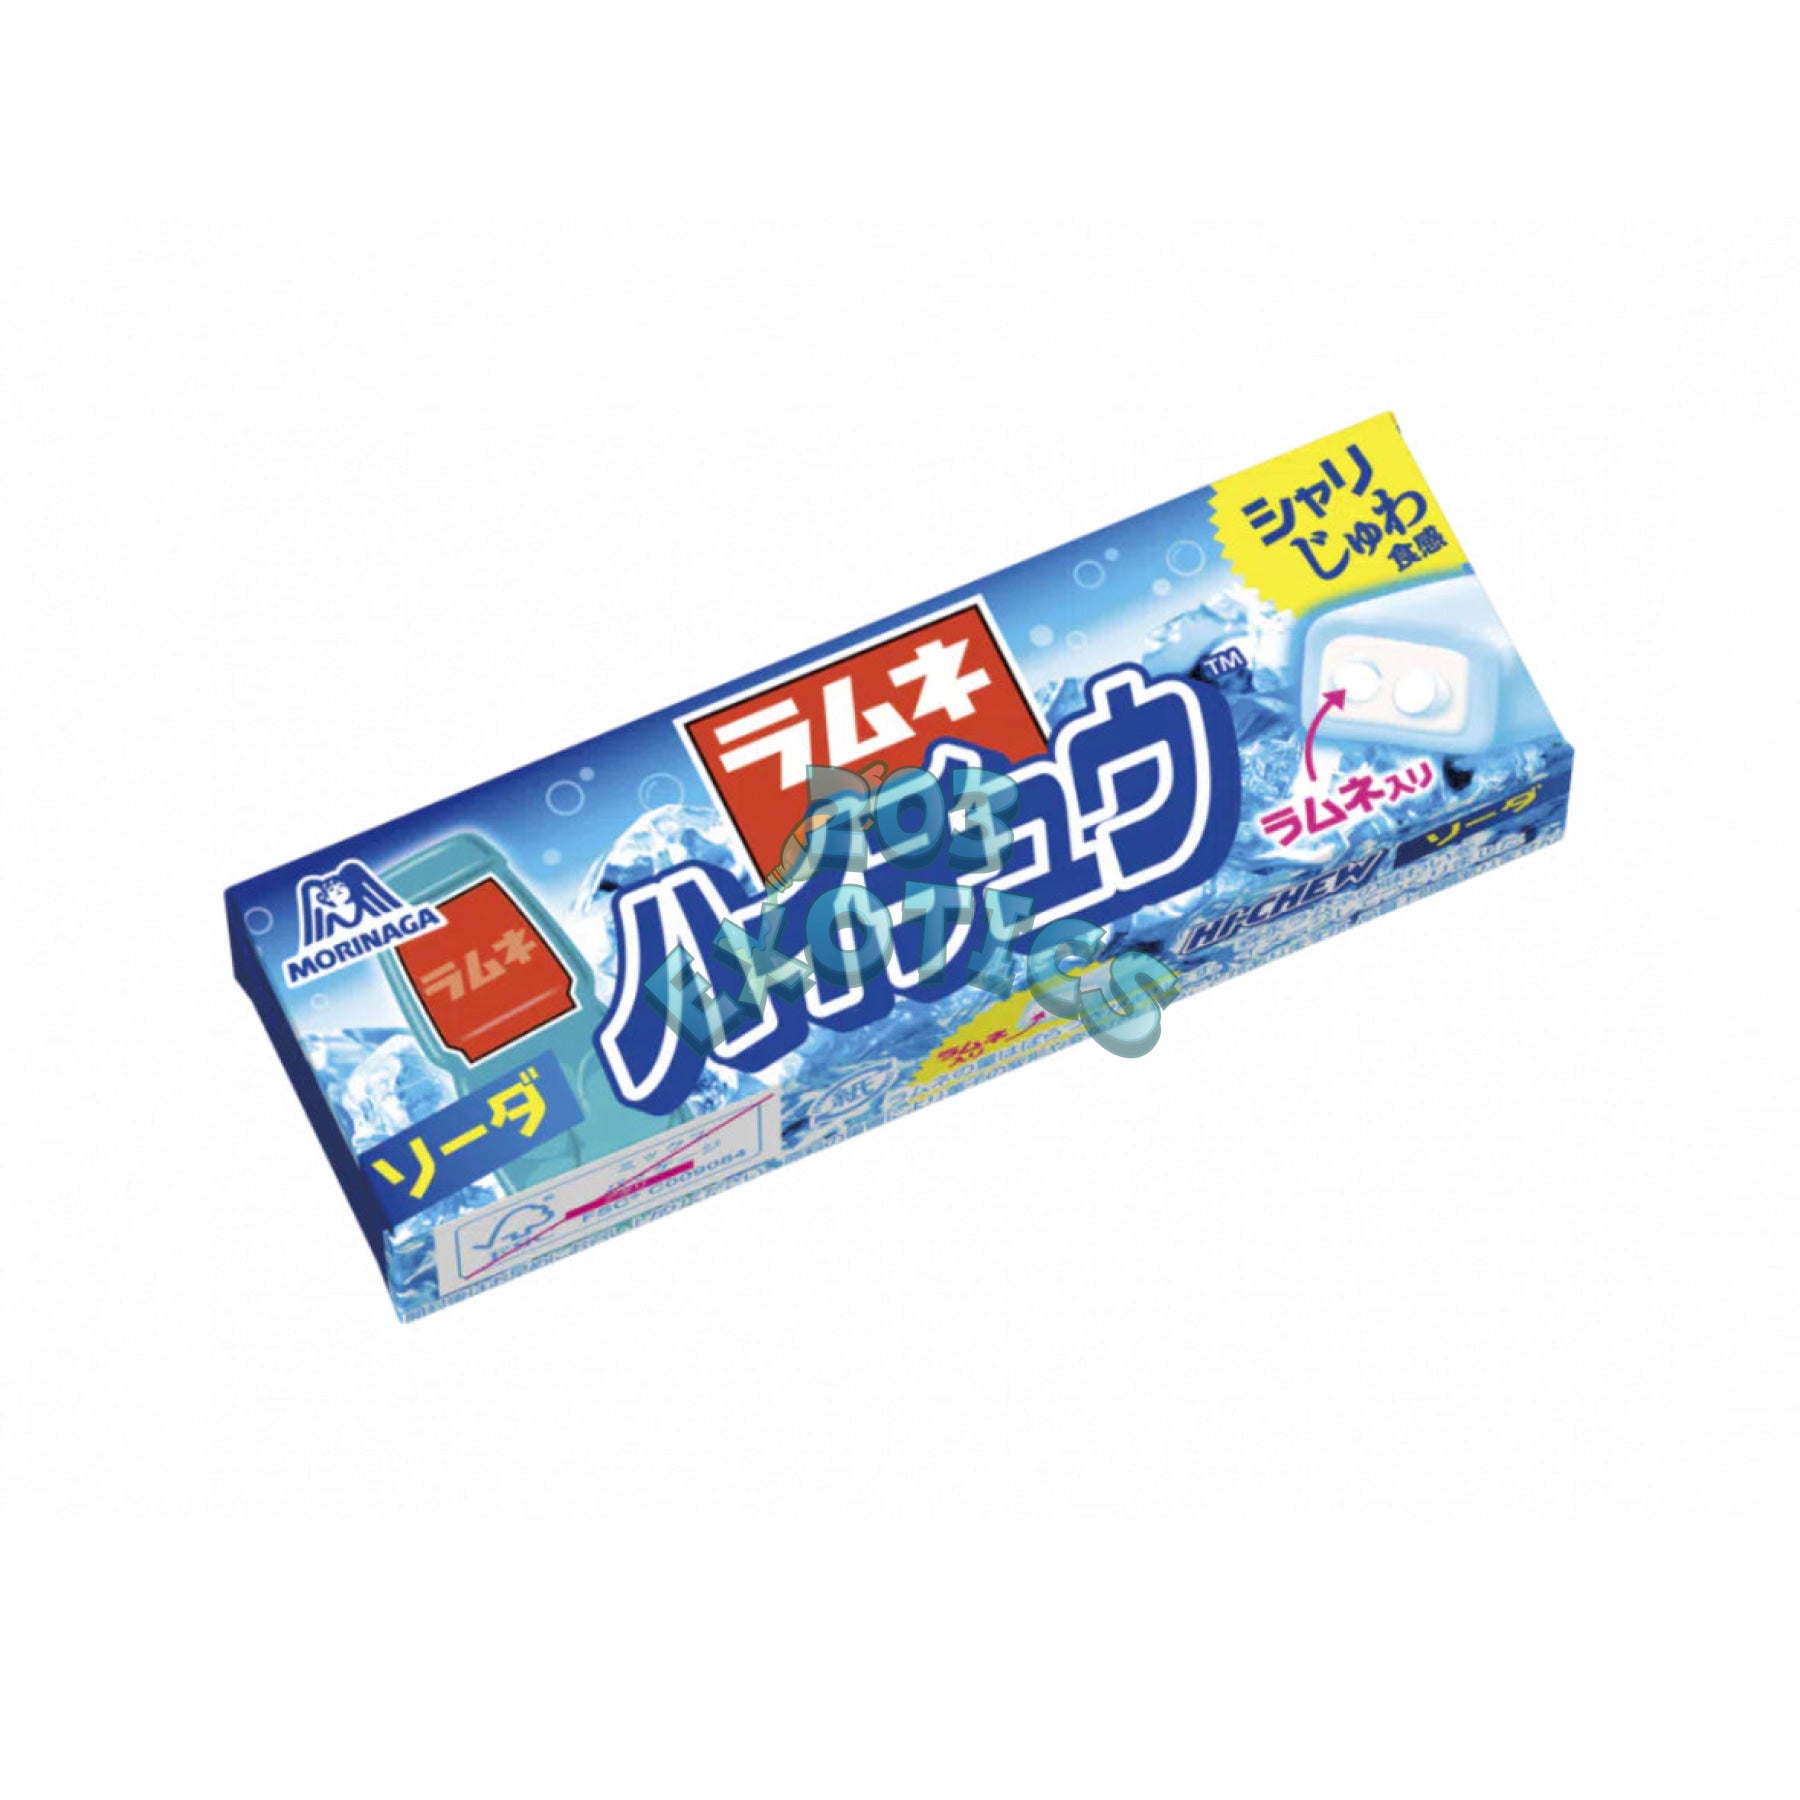 Hi-Chew Ramune Japanese Soda (Japanese Version) (7Ct) Candy